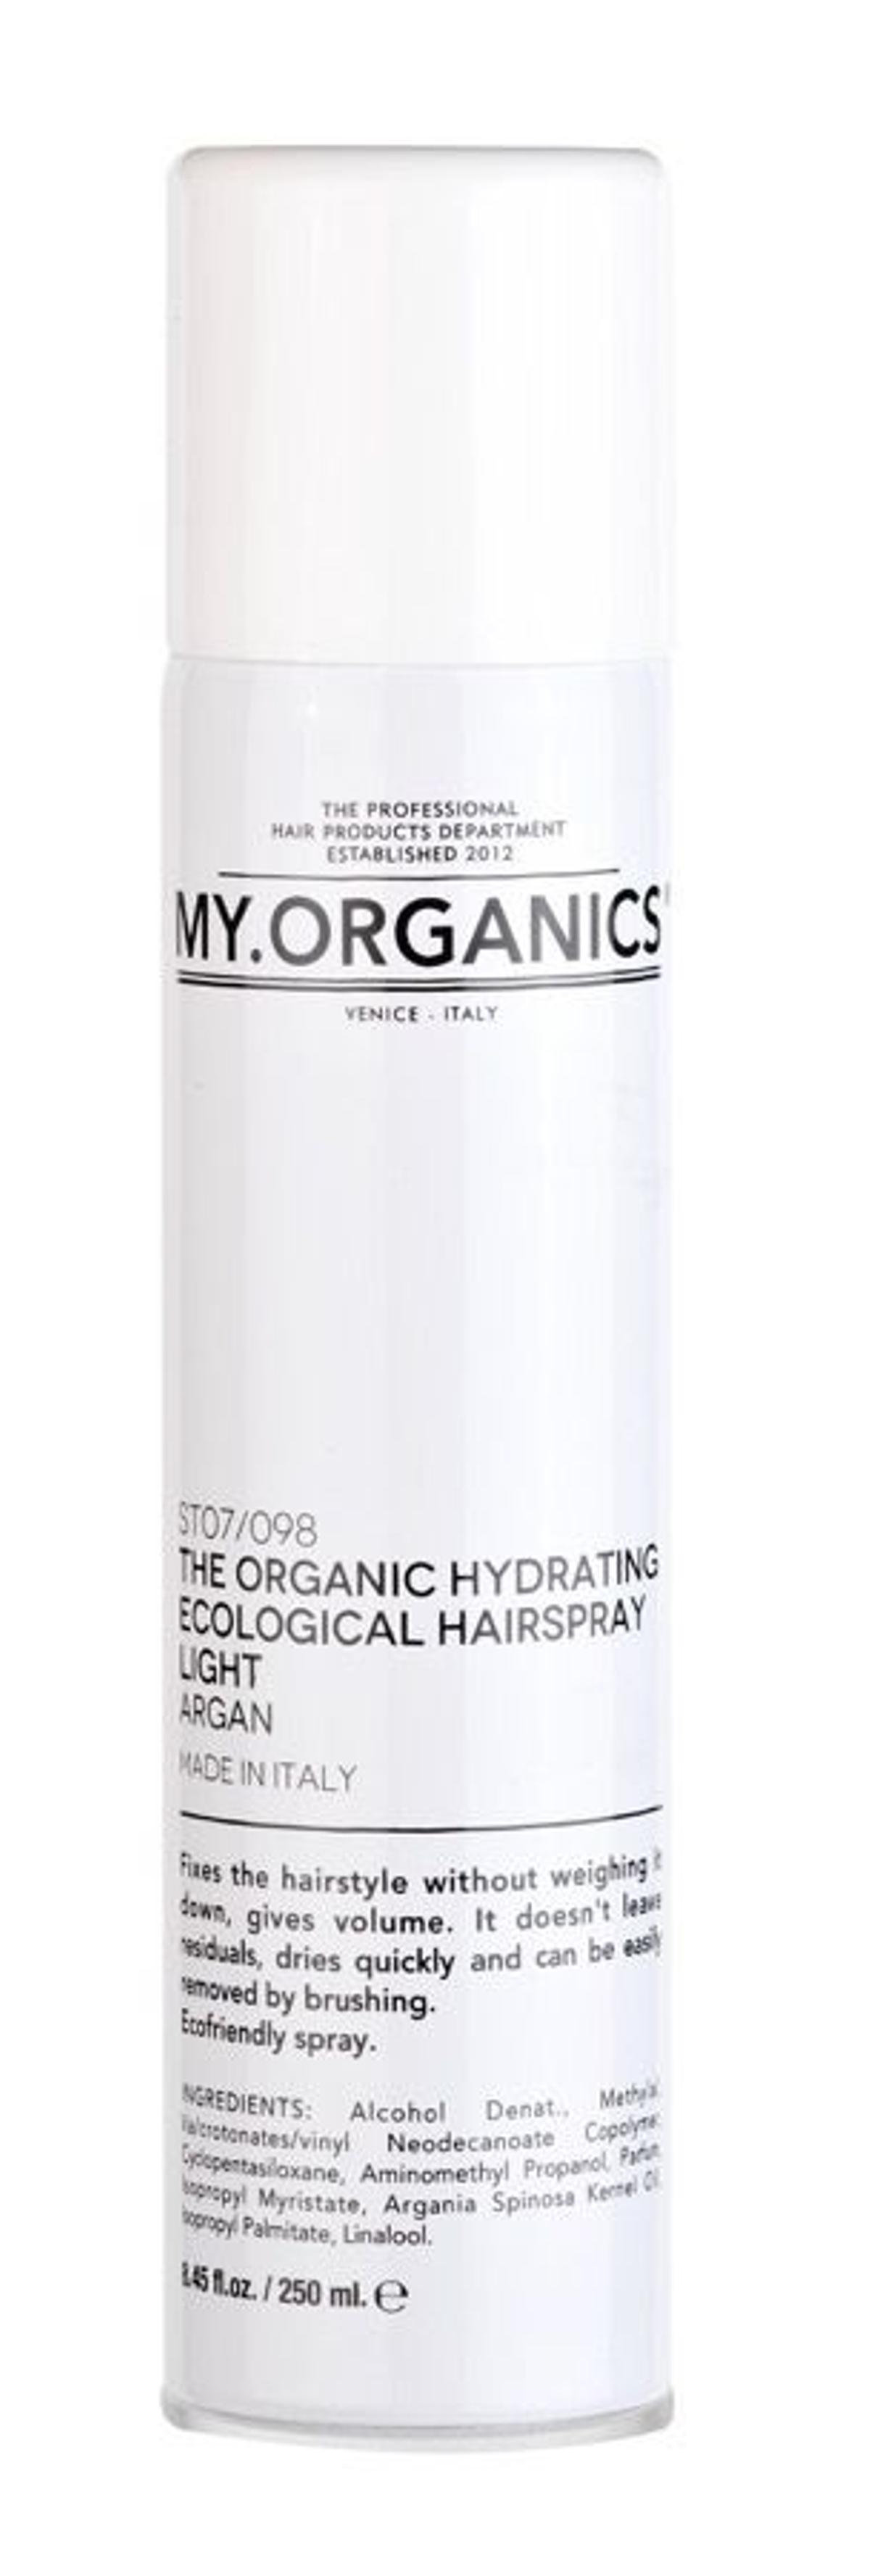 The Organic Hydrating Ecological Hair Spray Light, de MY Organics